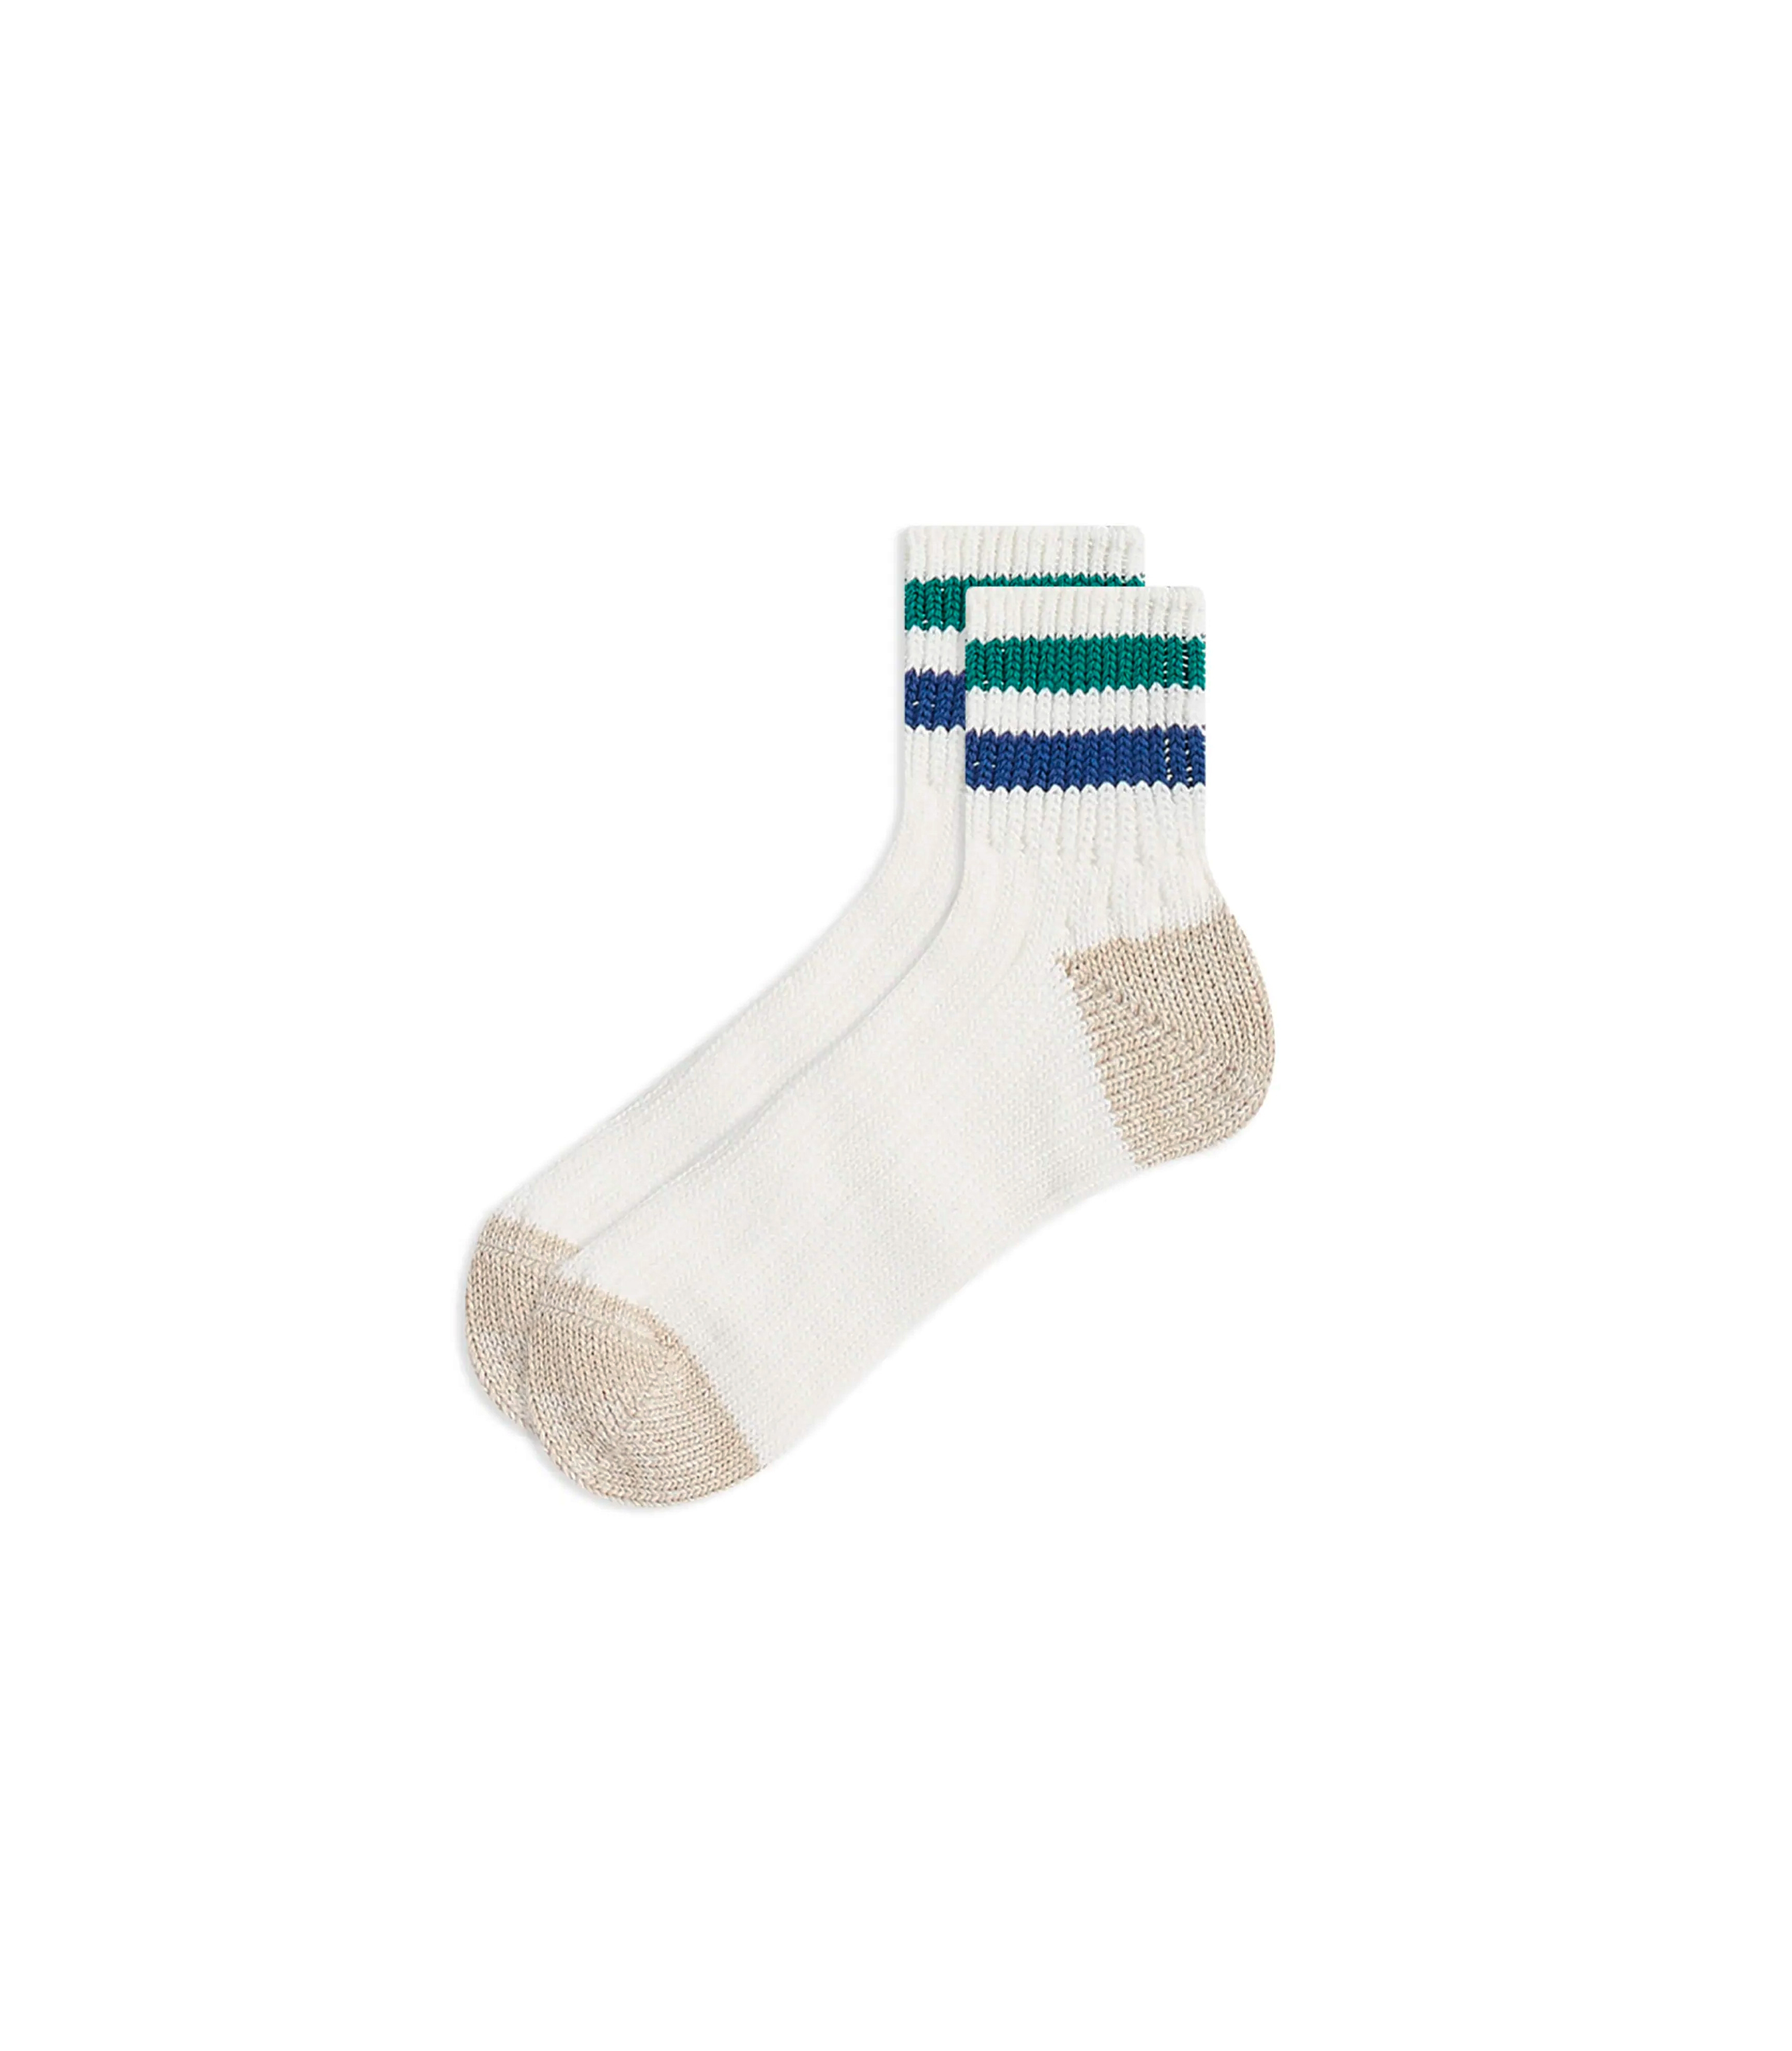 Coarse Ribbed Oldschool Ankle Sock - Green / Dark Blue